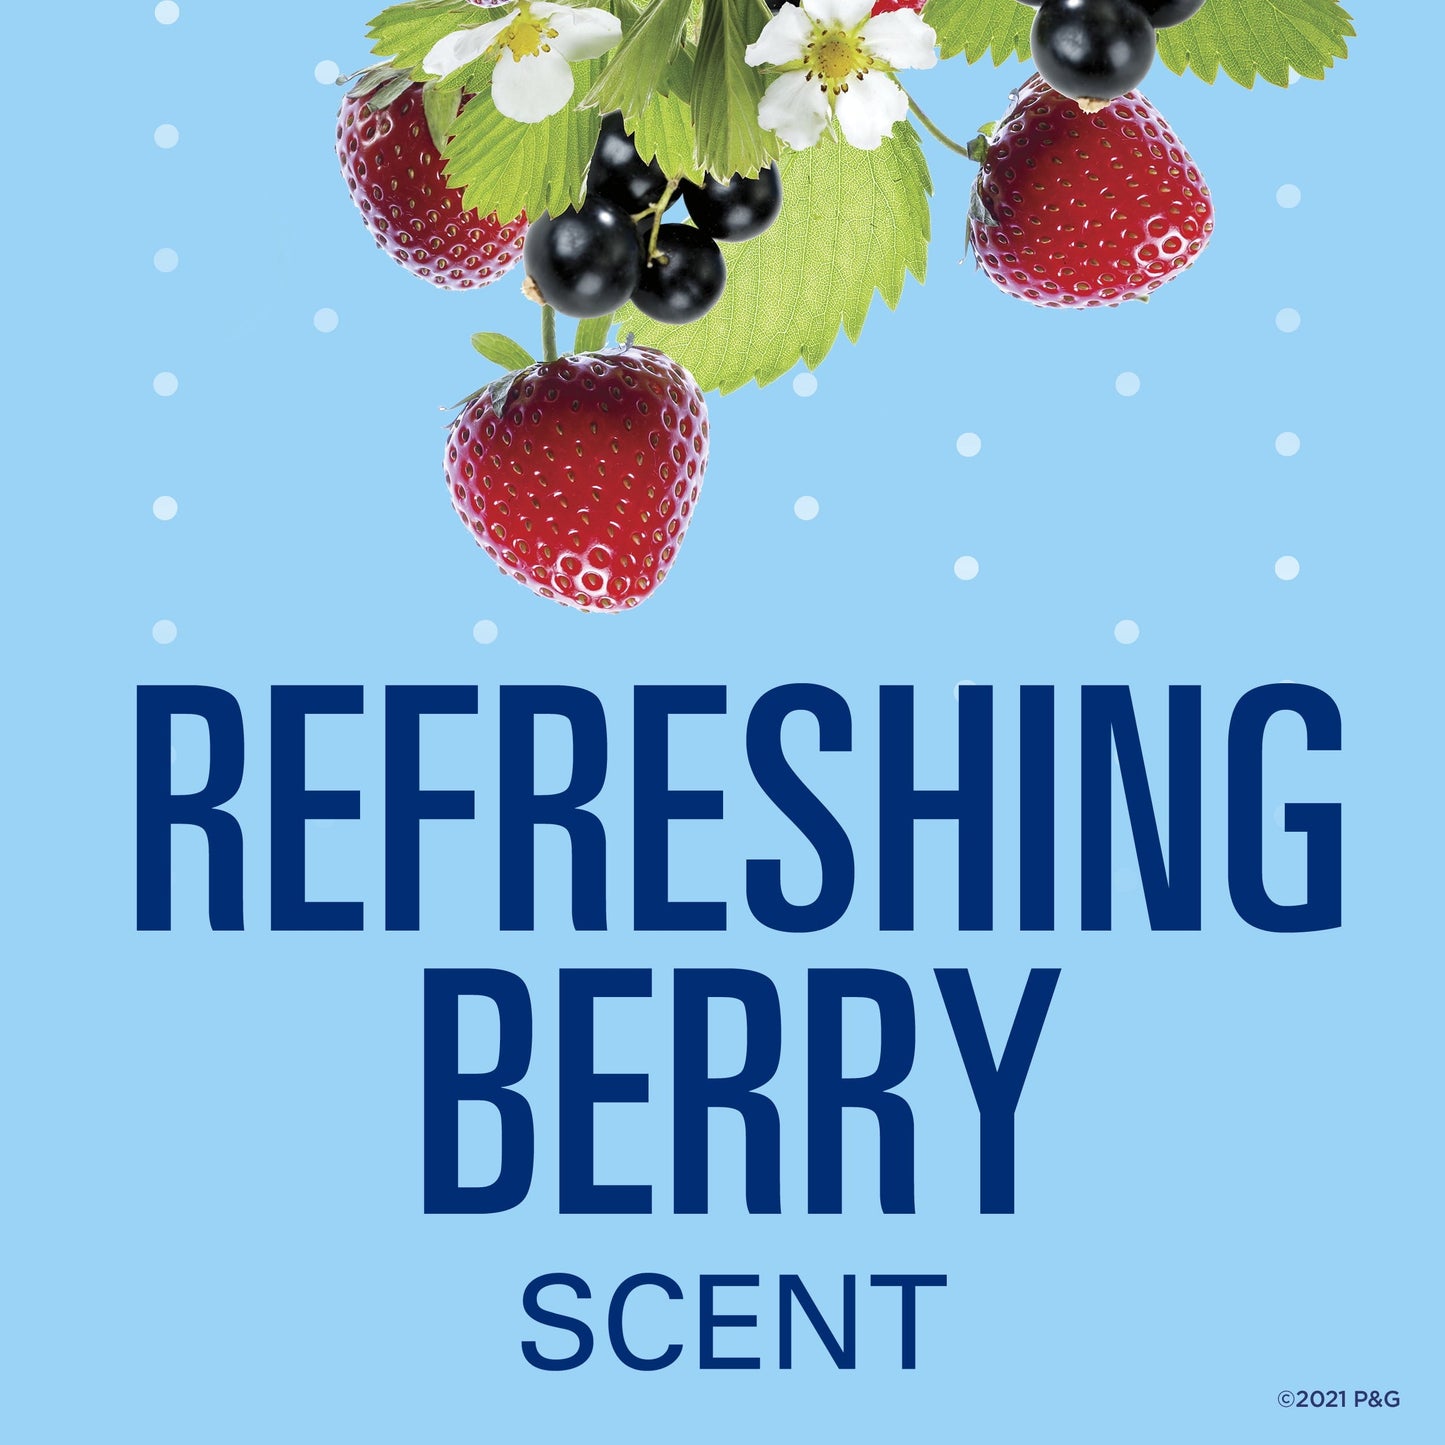 Secret Fresh Antiperspirant Deodorant Clear Gel, Berry, 3.4 oz